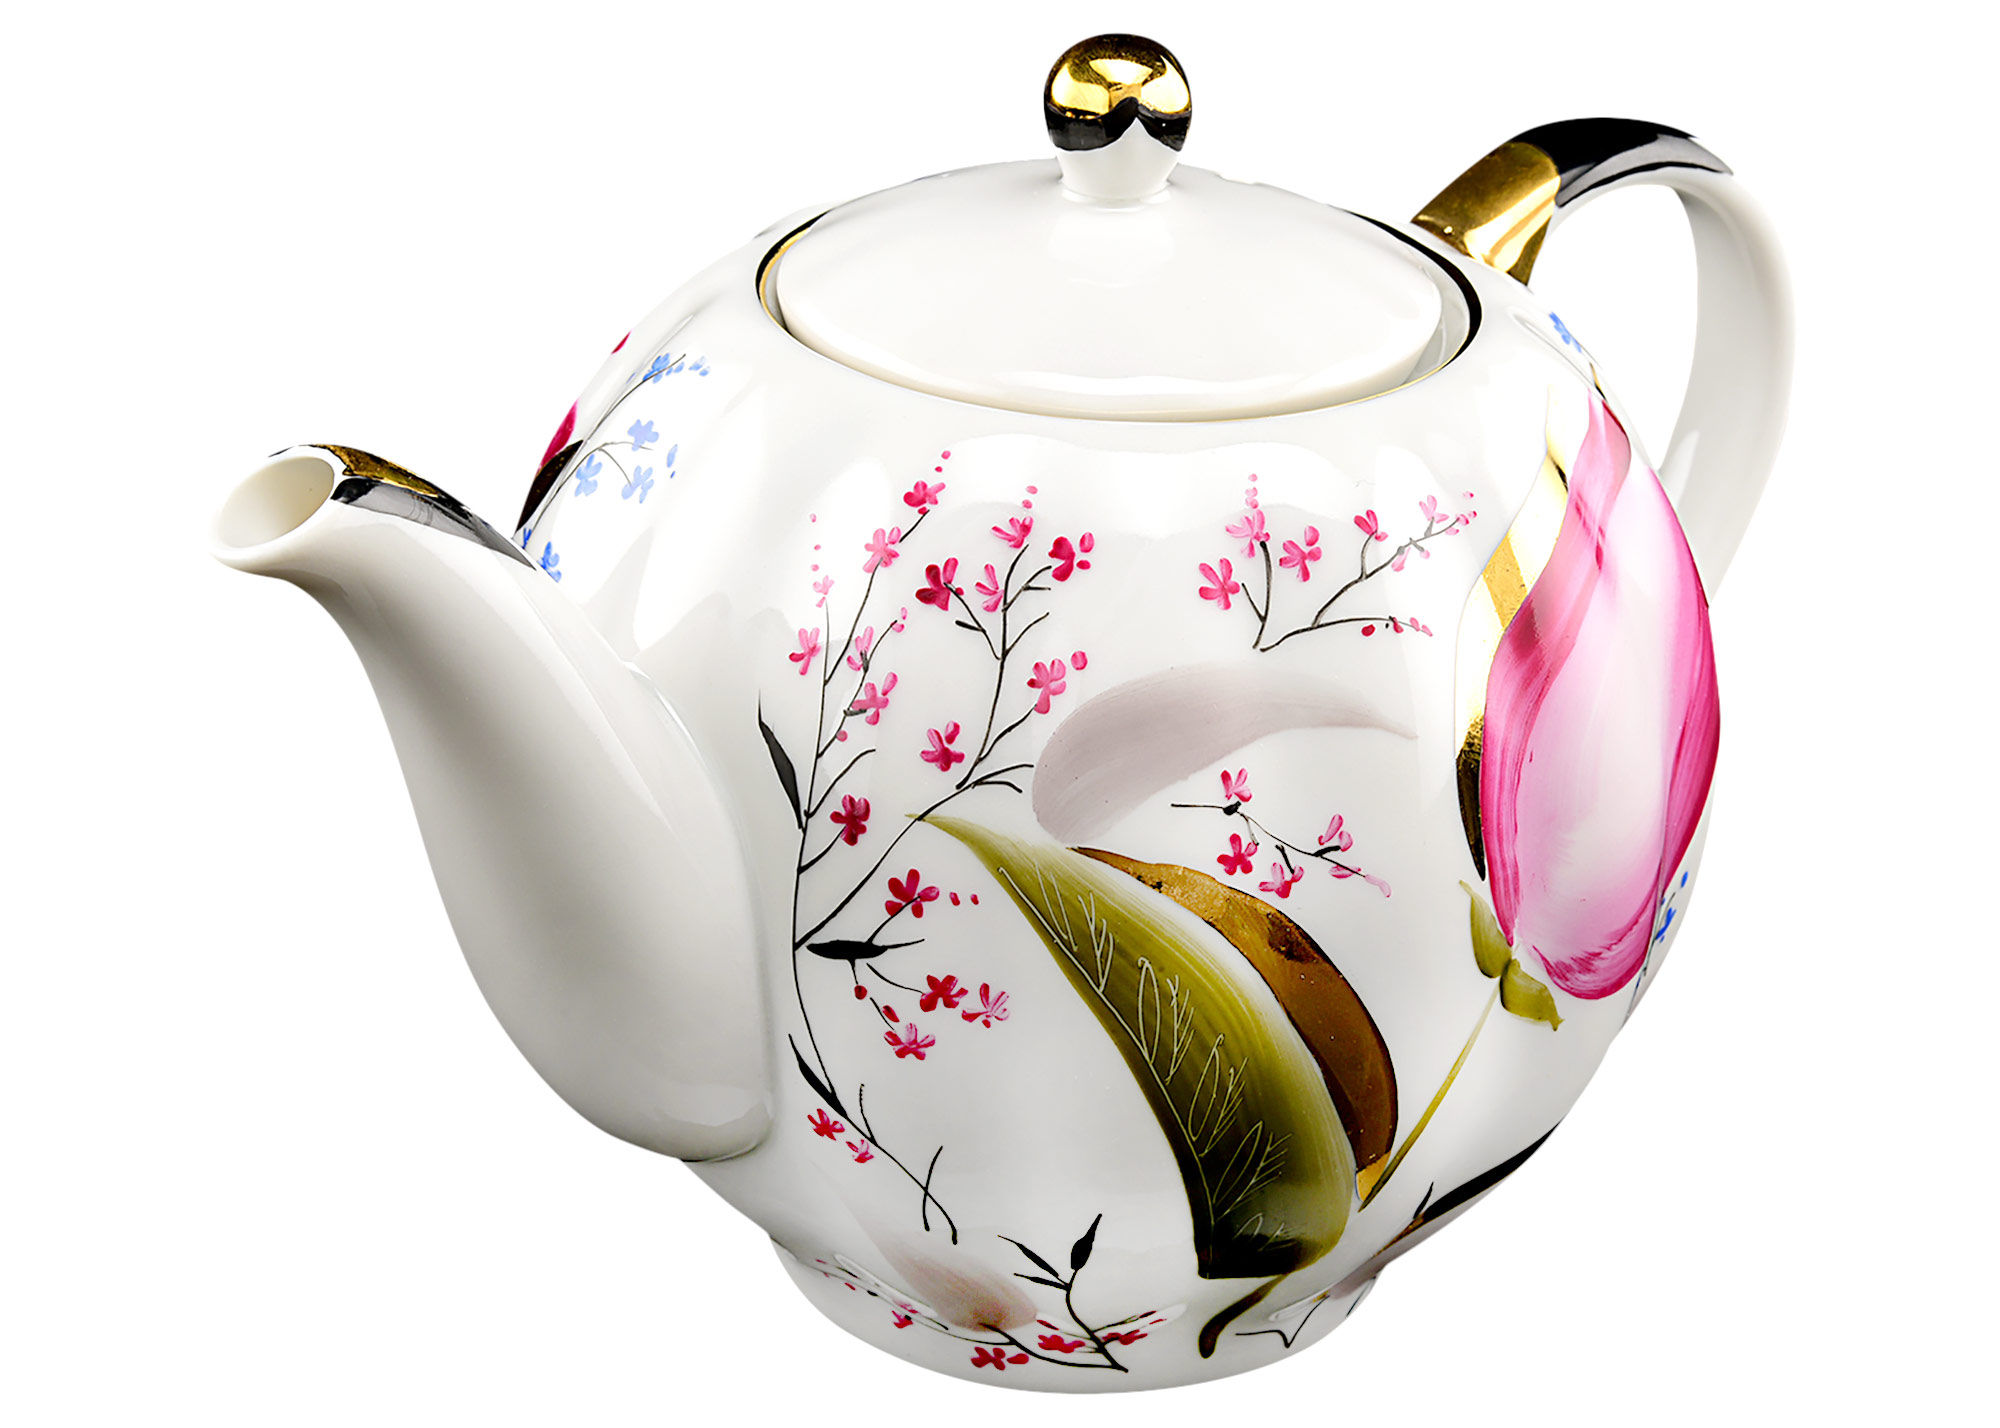 Buy Pink Tulips Porcelain Teapot at GoldenCockerel.com